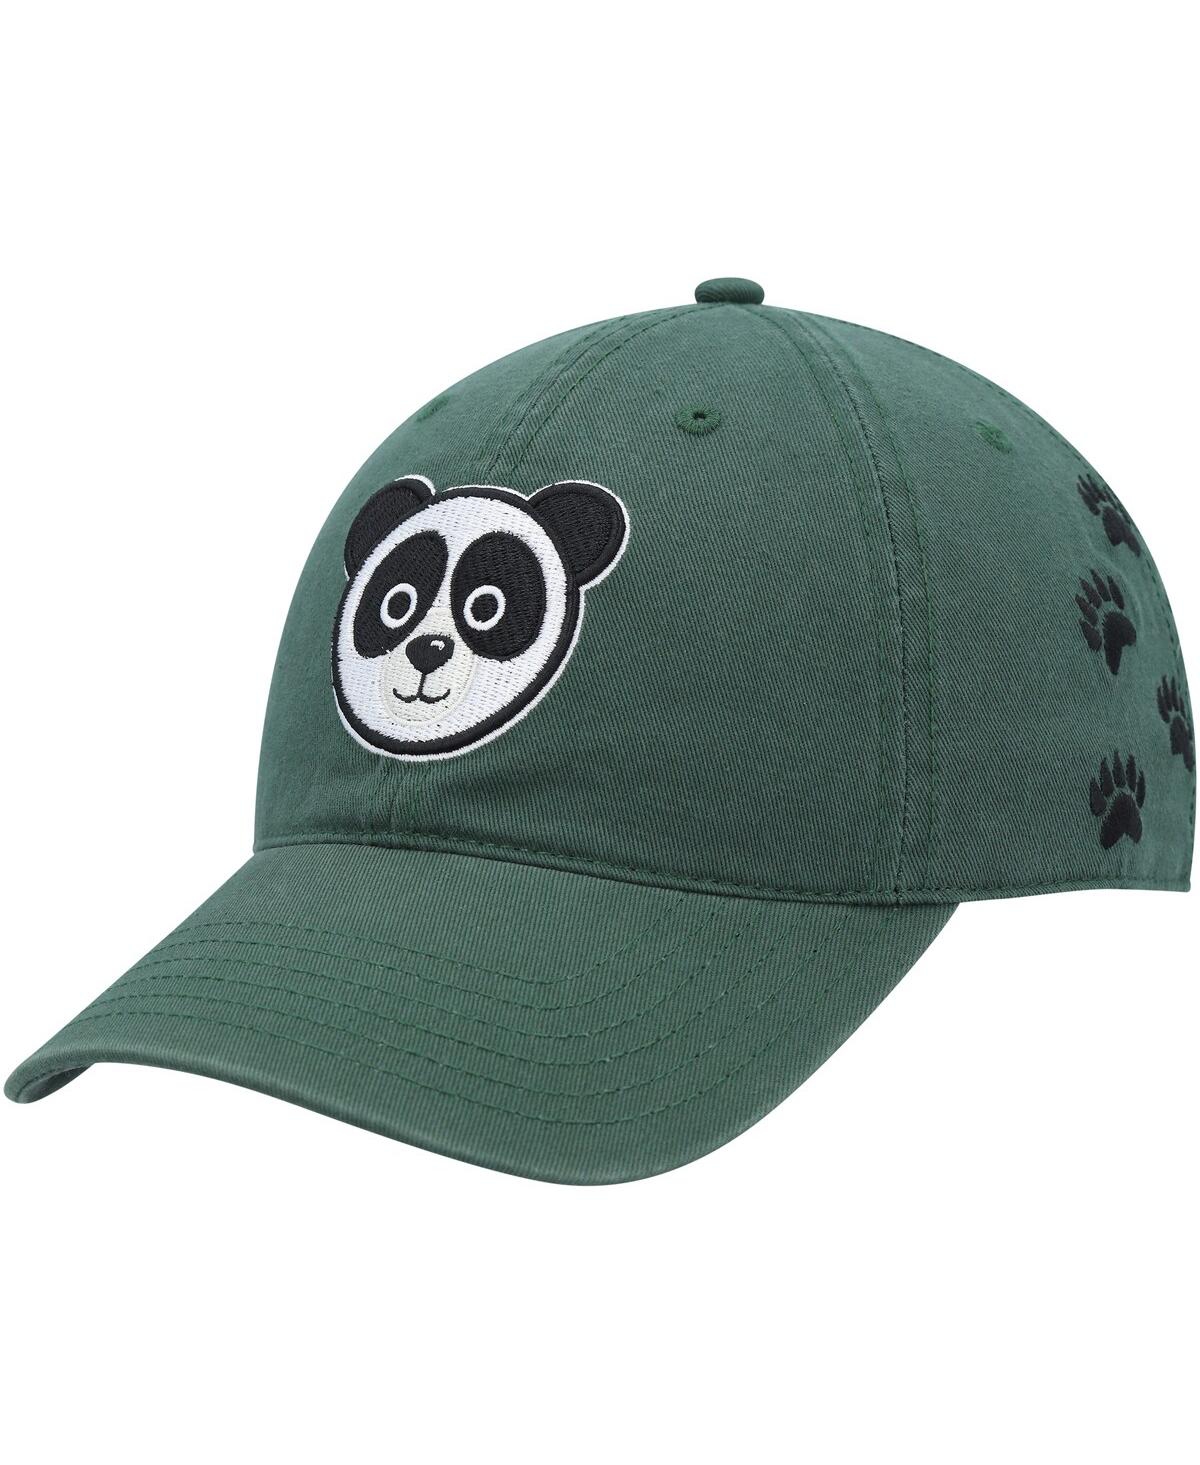 Men's Explore Green Panda Dad Adjustable Hat - Green